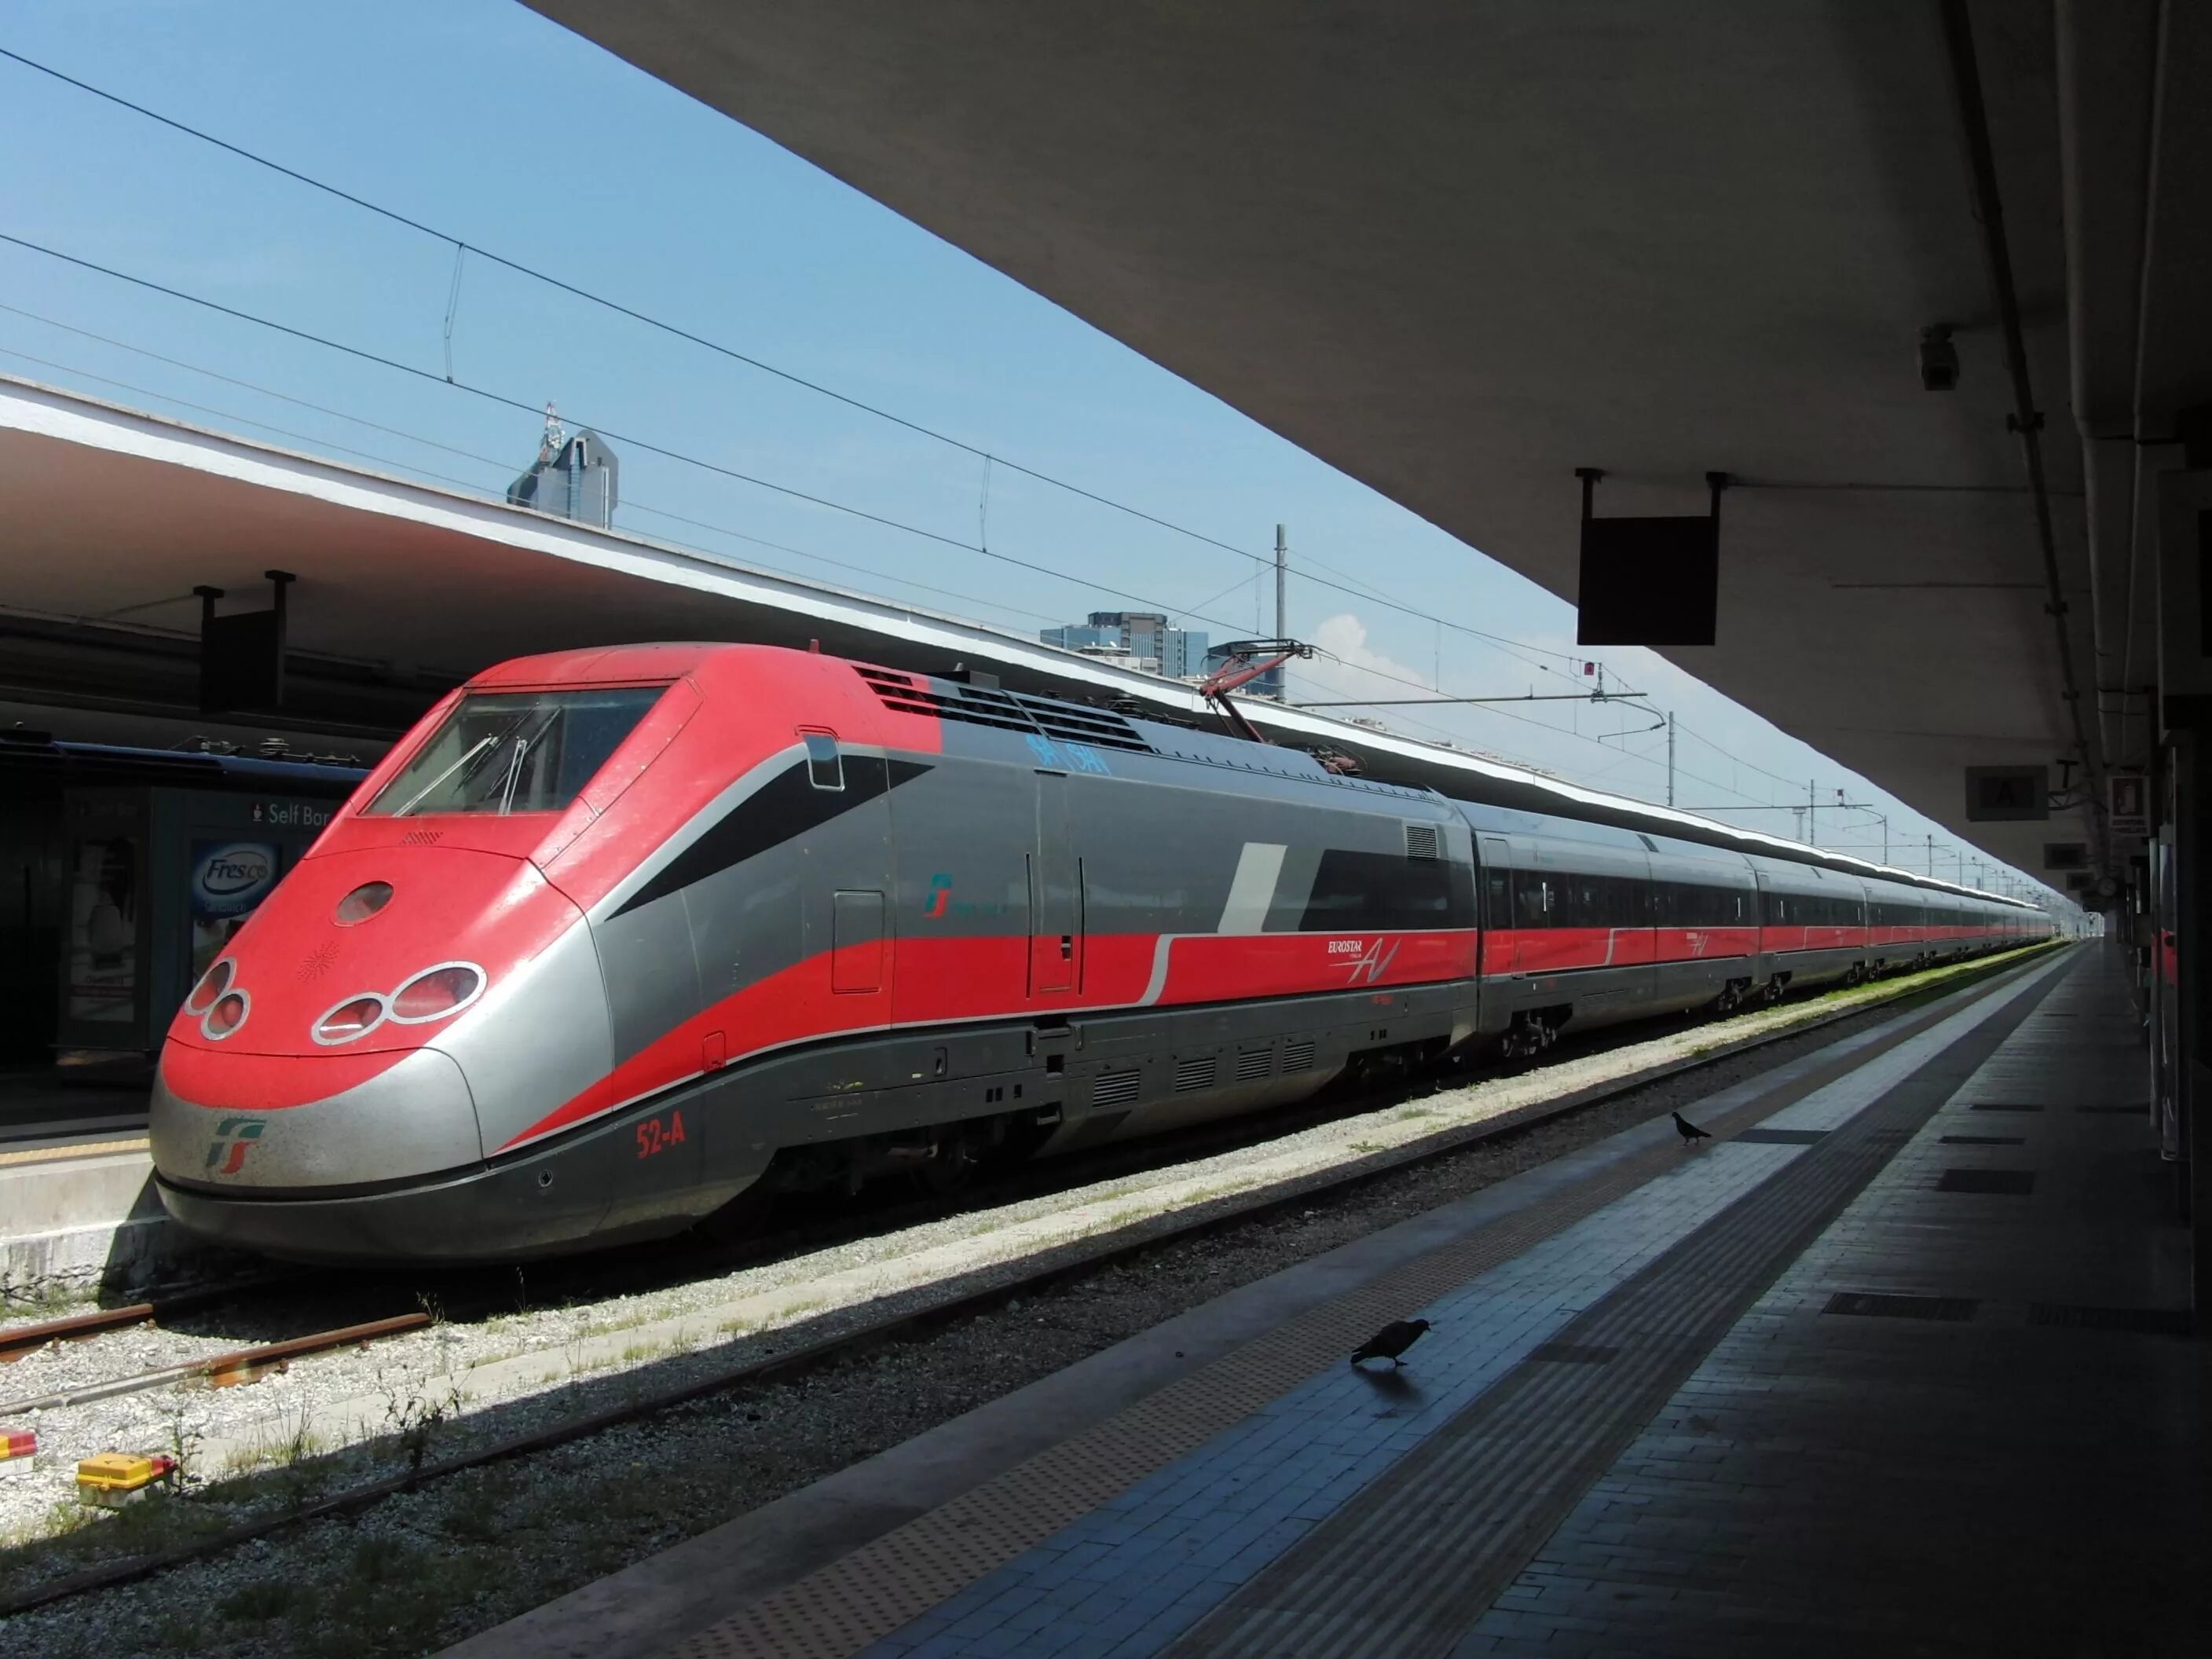 FS class ETR 500. Frecciarossa 9512. Поезда Italia Frecciarossa. Frecciarossa etr500.